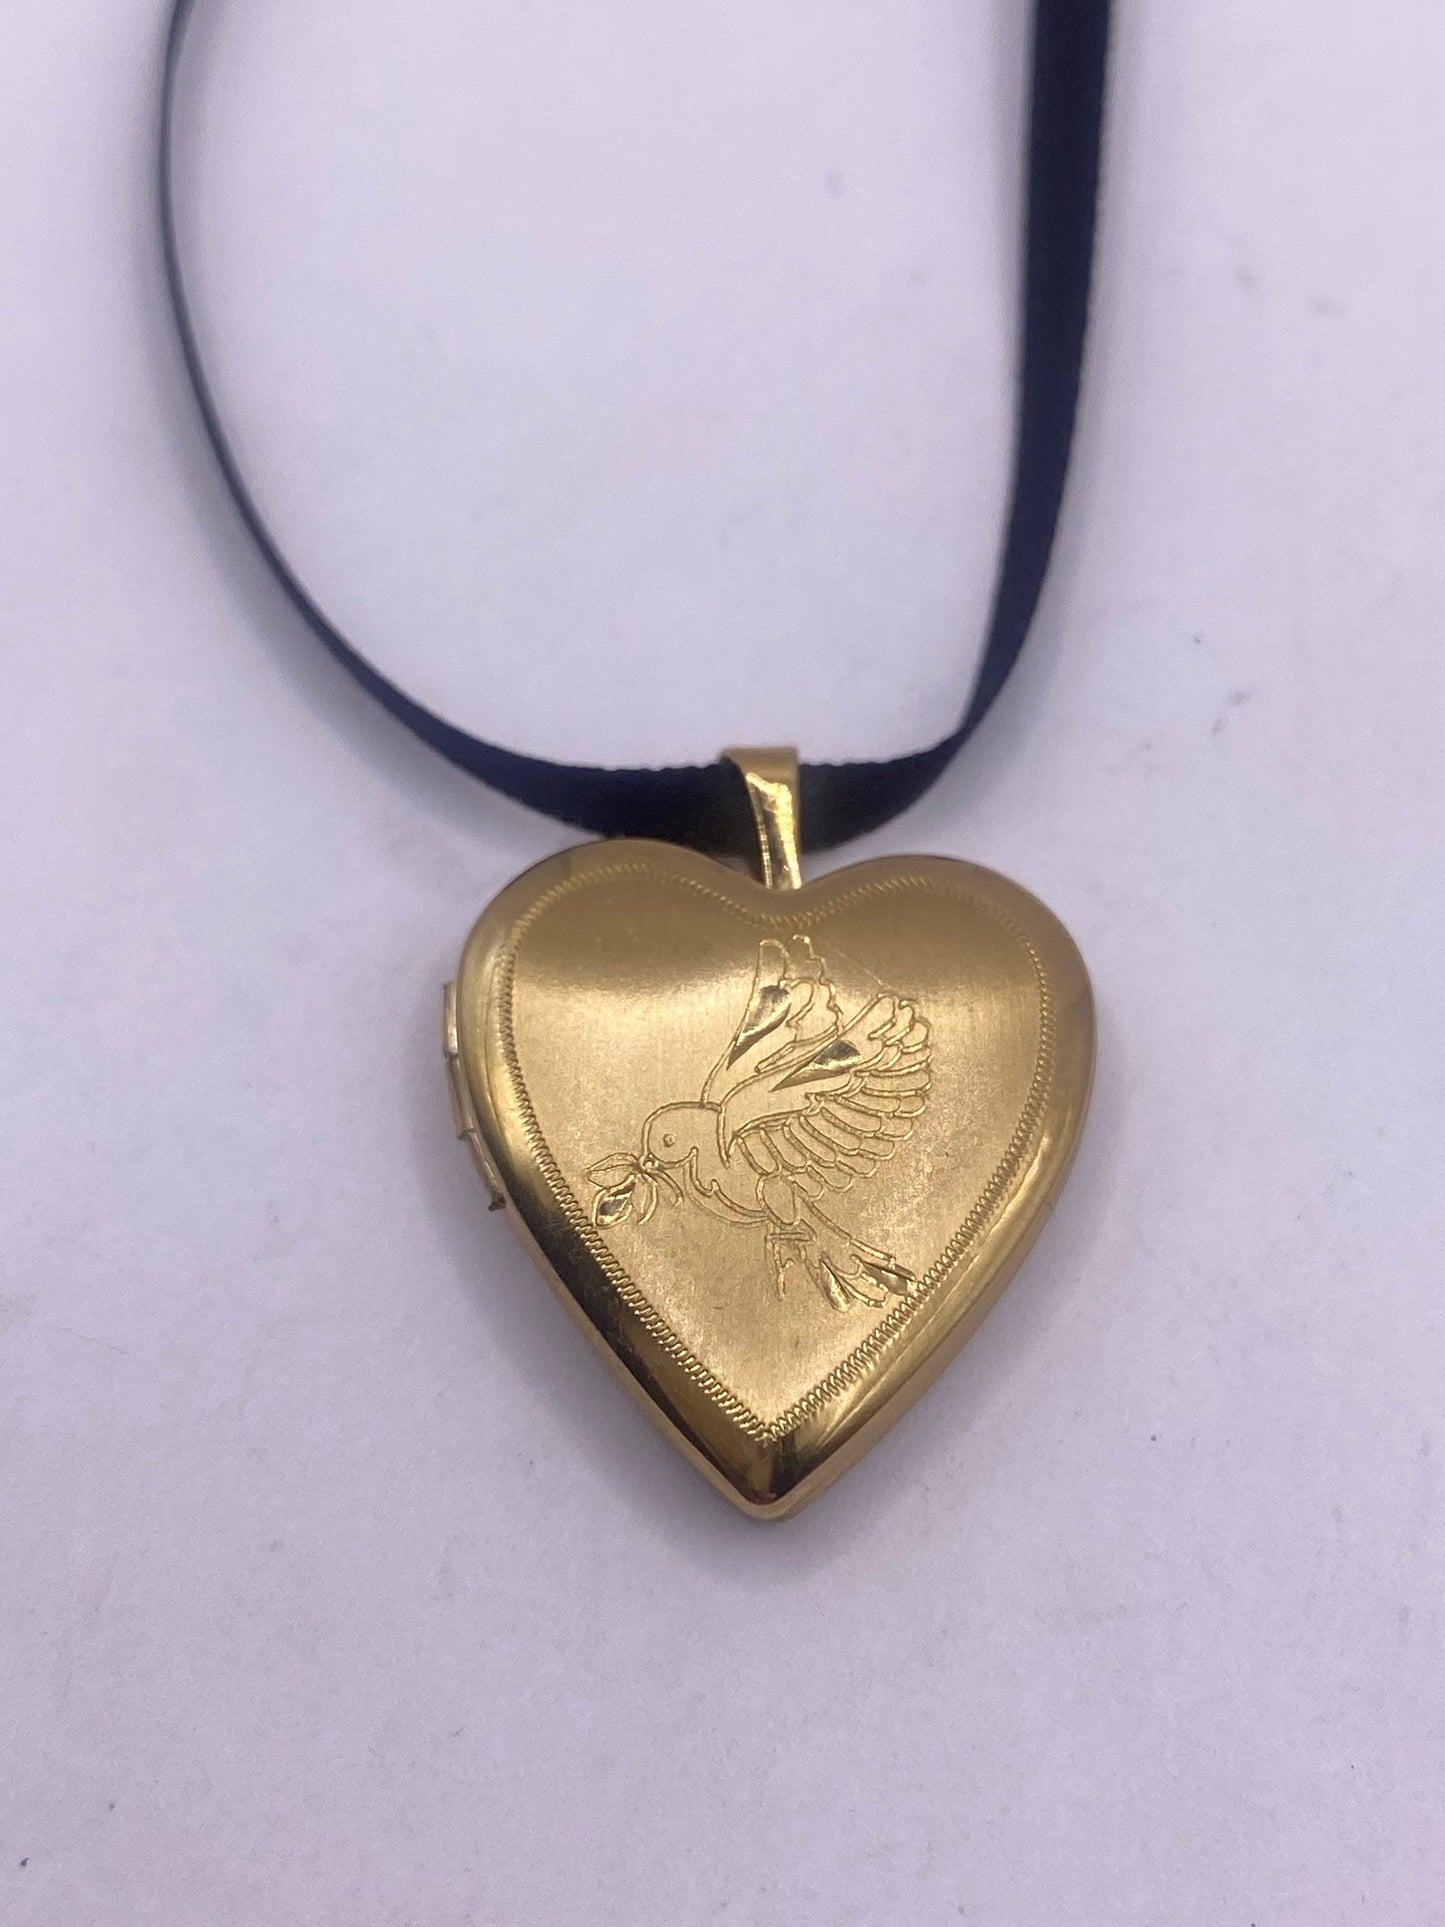 Vintage Gold Locket | Tiny Heart 9k Gold Filled Pendant Photo Memory Charm Engraved Bird | Choker Necklace